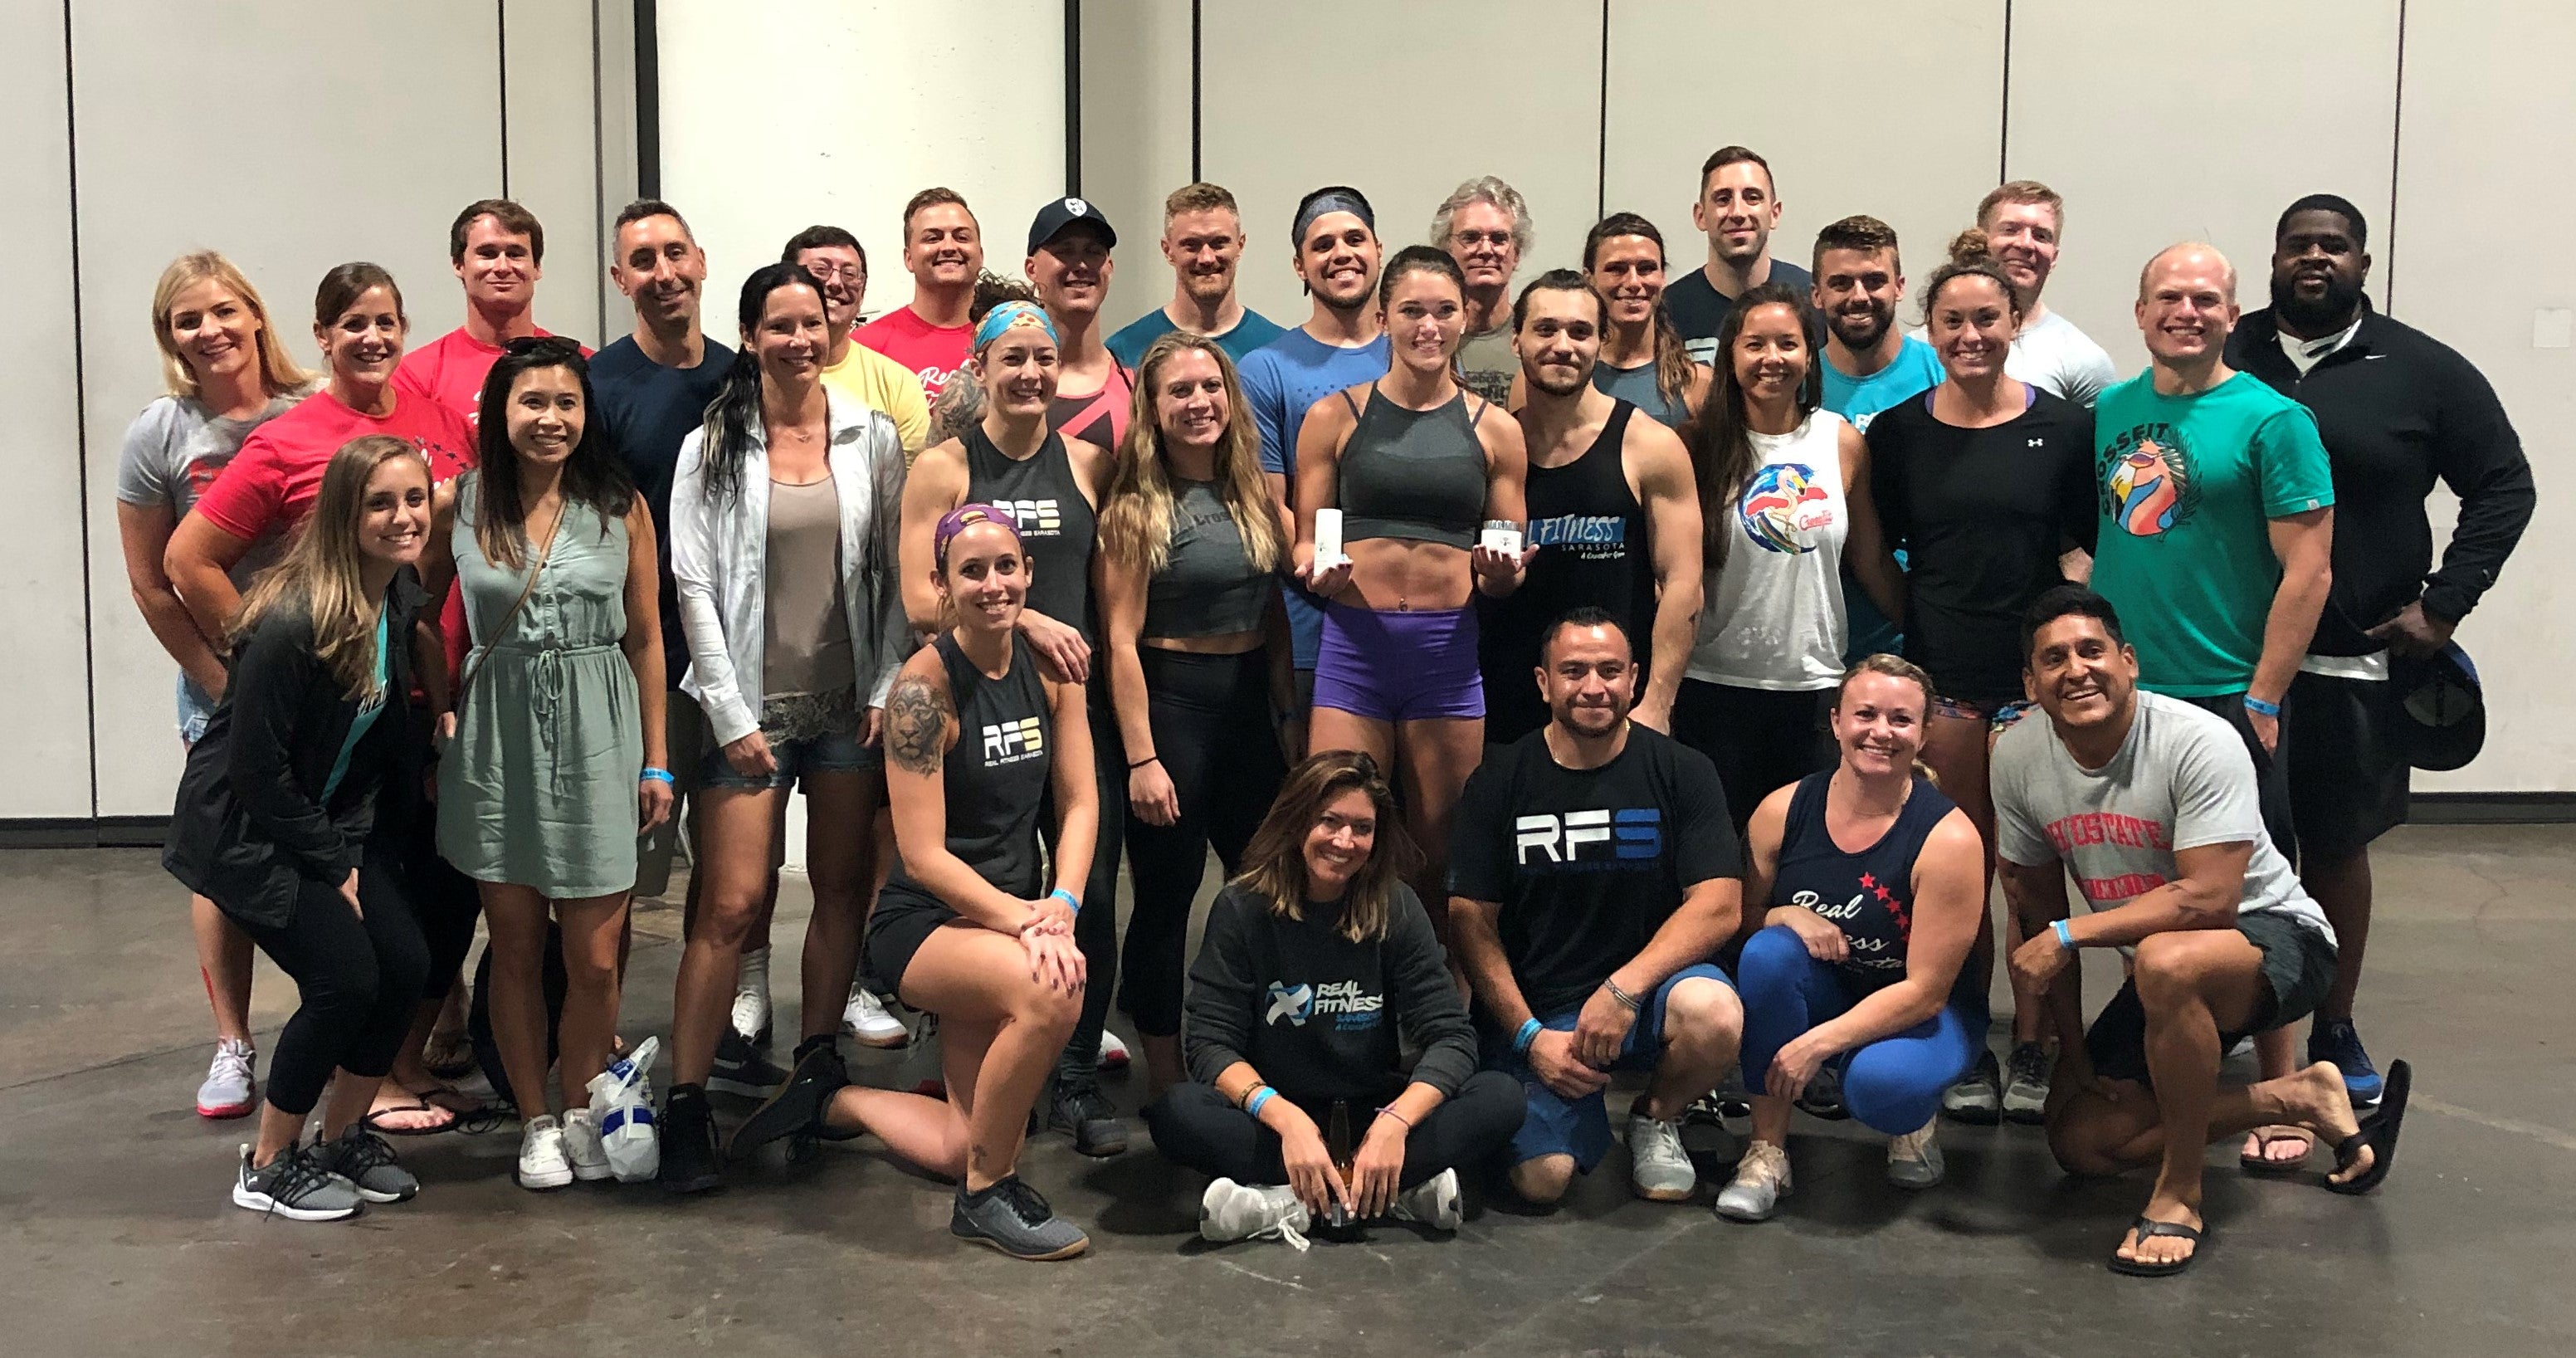 Real Fitness Sarasota at the Tampa Bay Games 2019